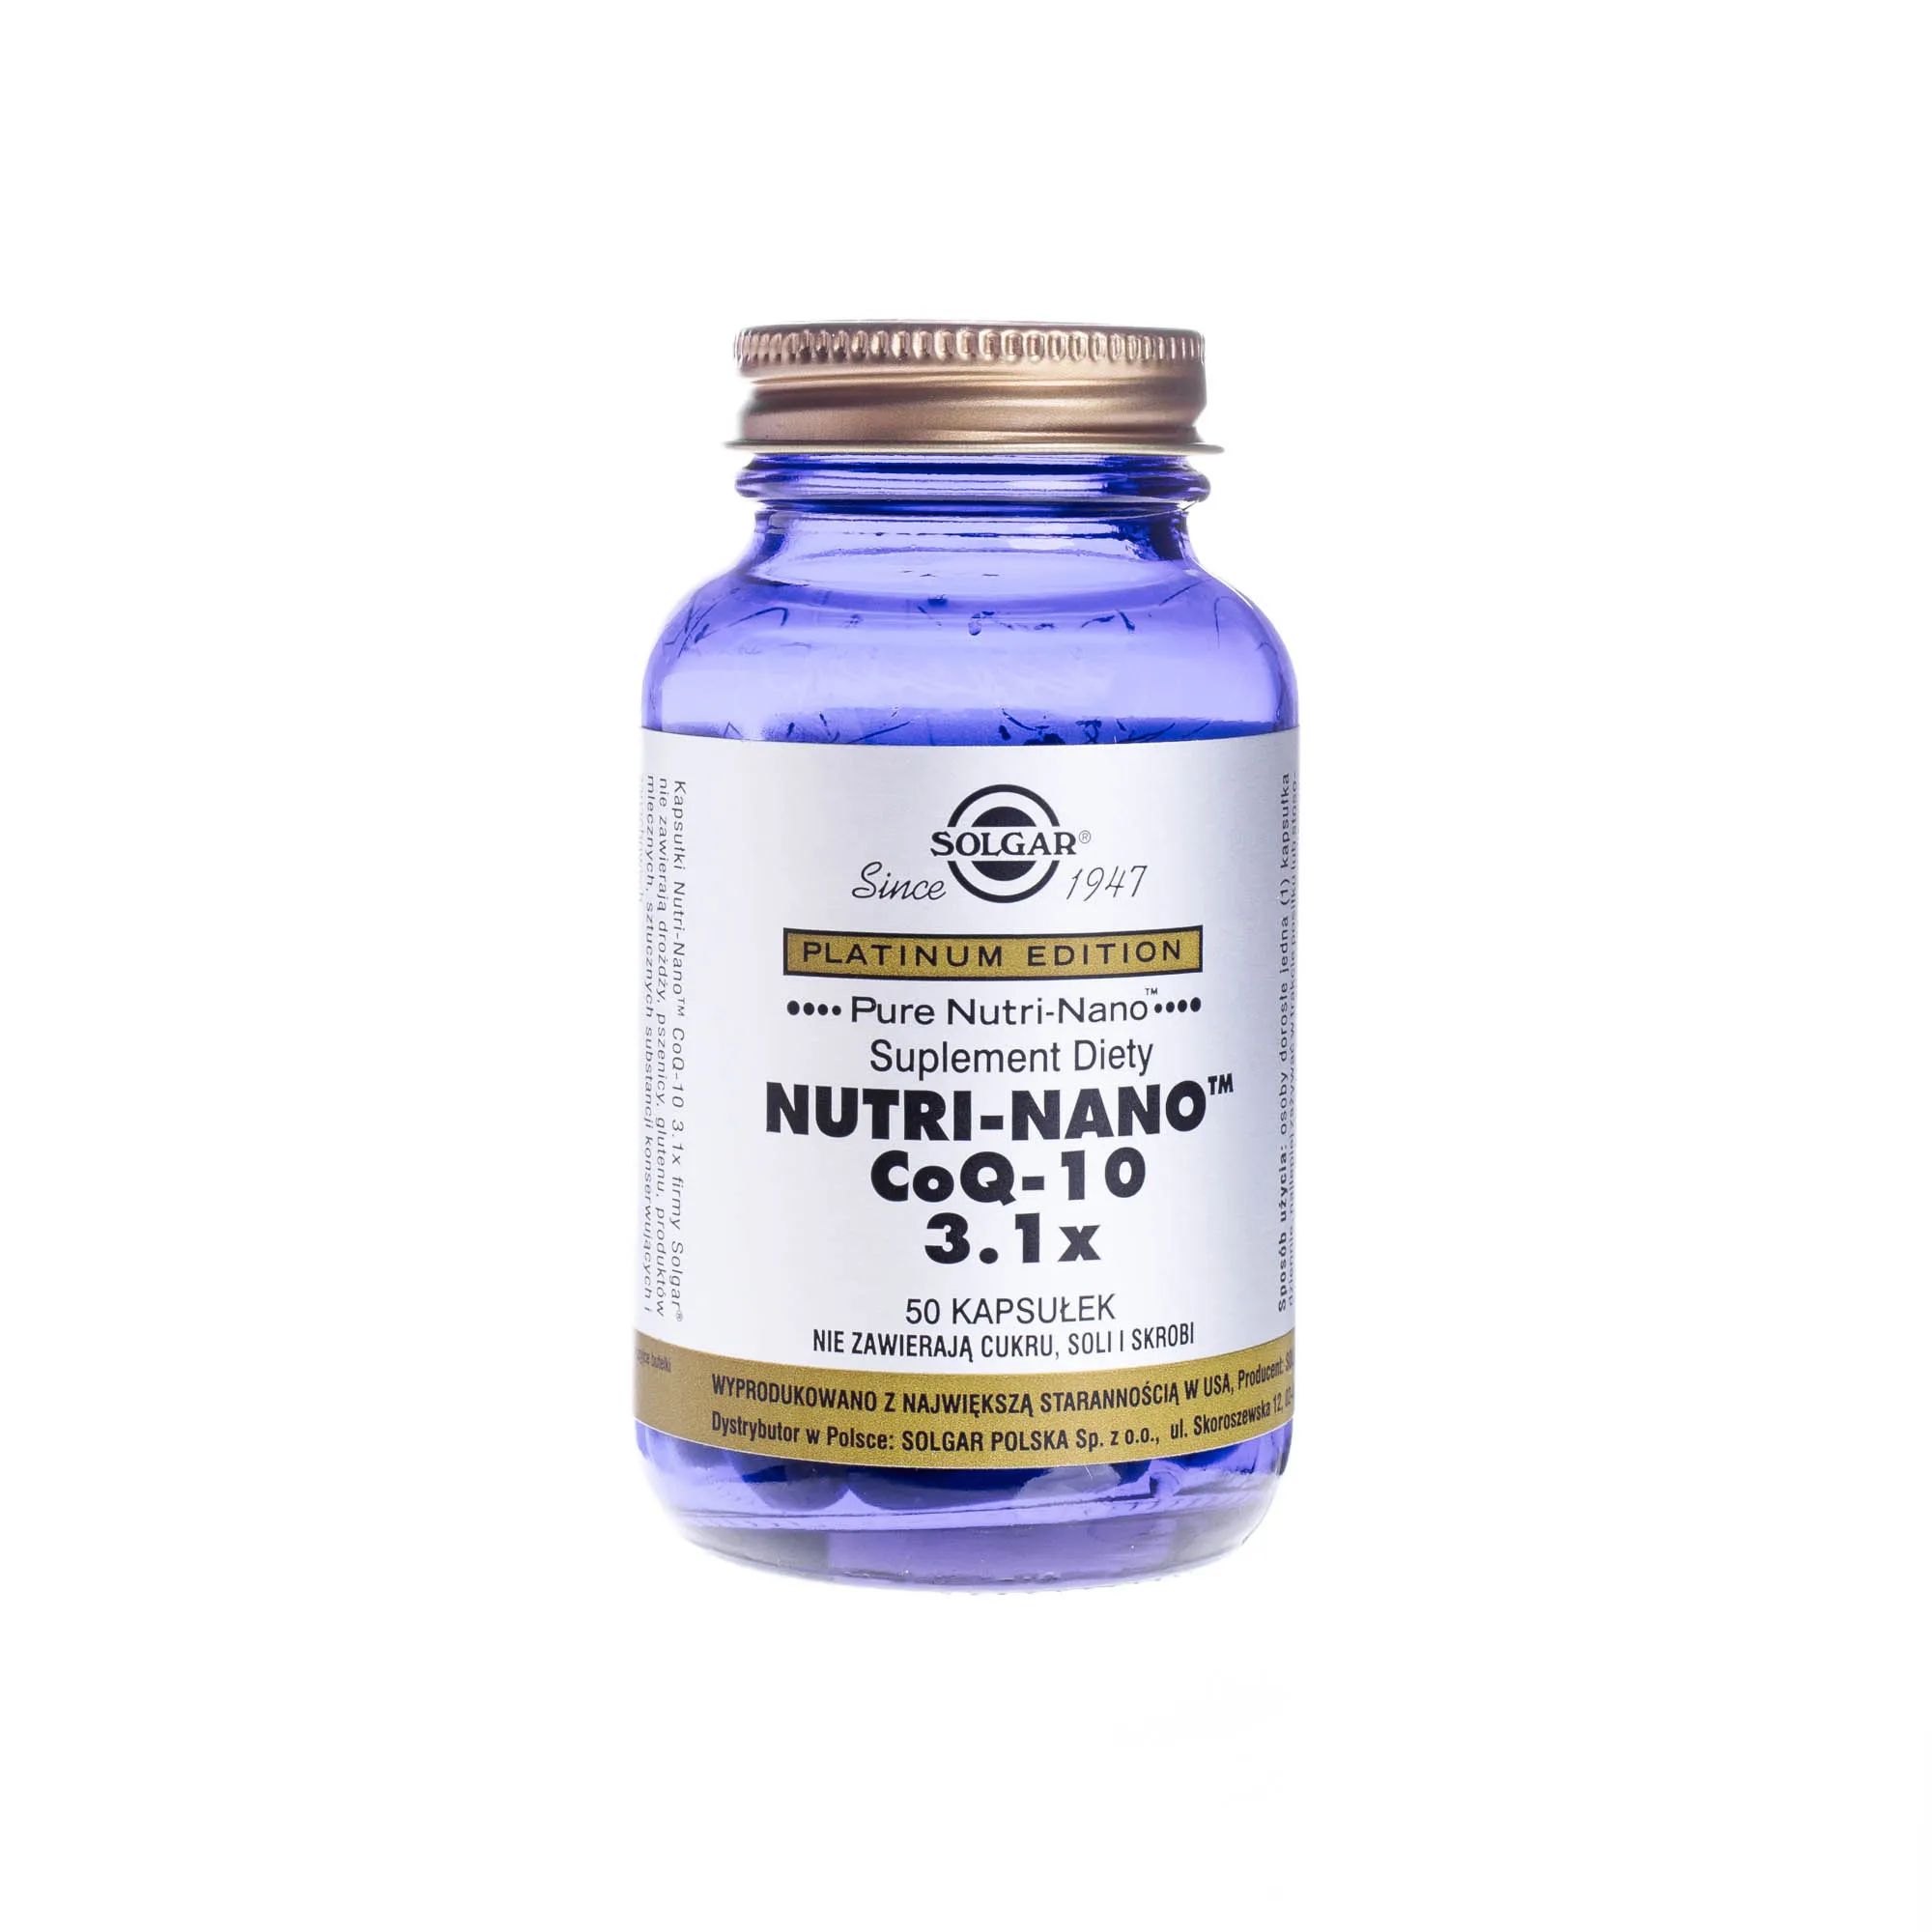 Solgar Nutri-nano CoQ-10 3.1x, suplement diety, 50 kapsułek 